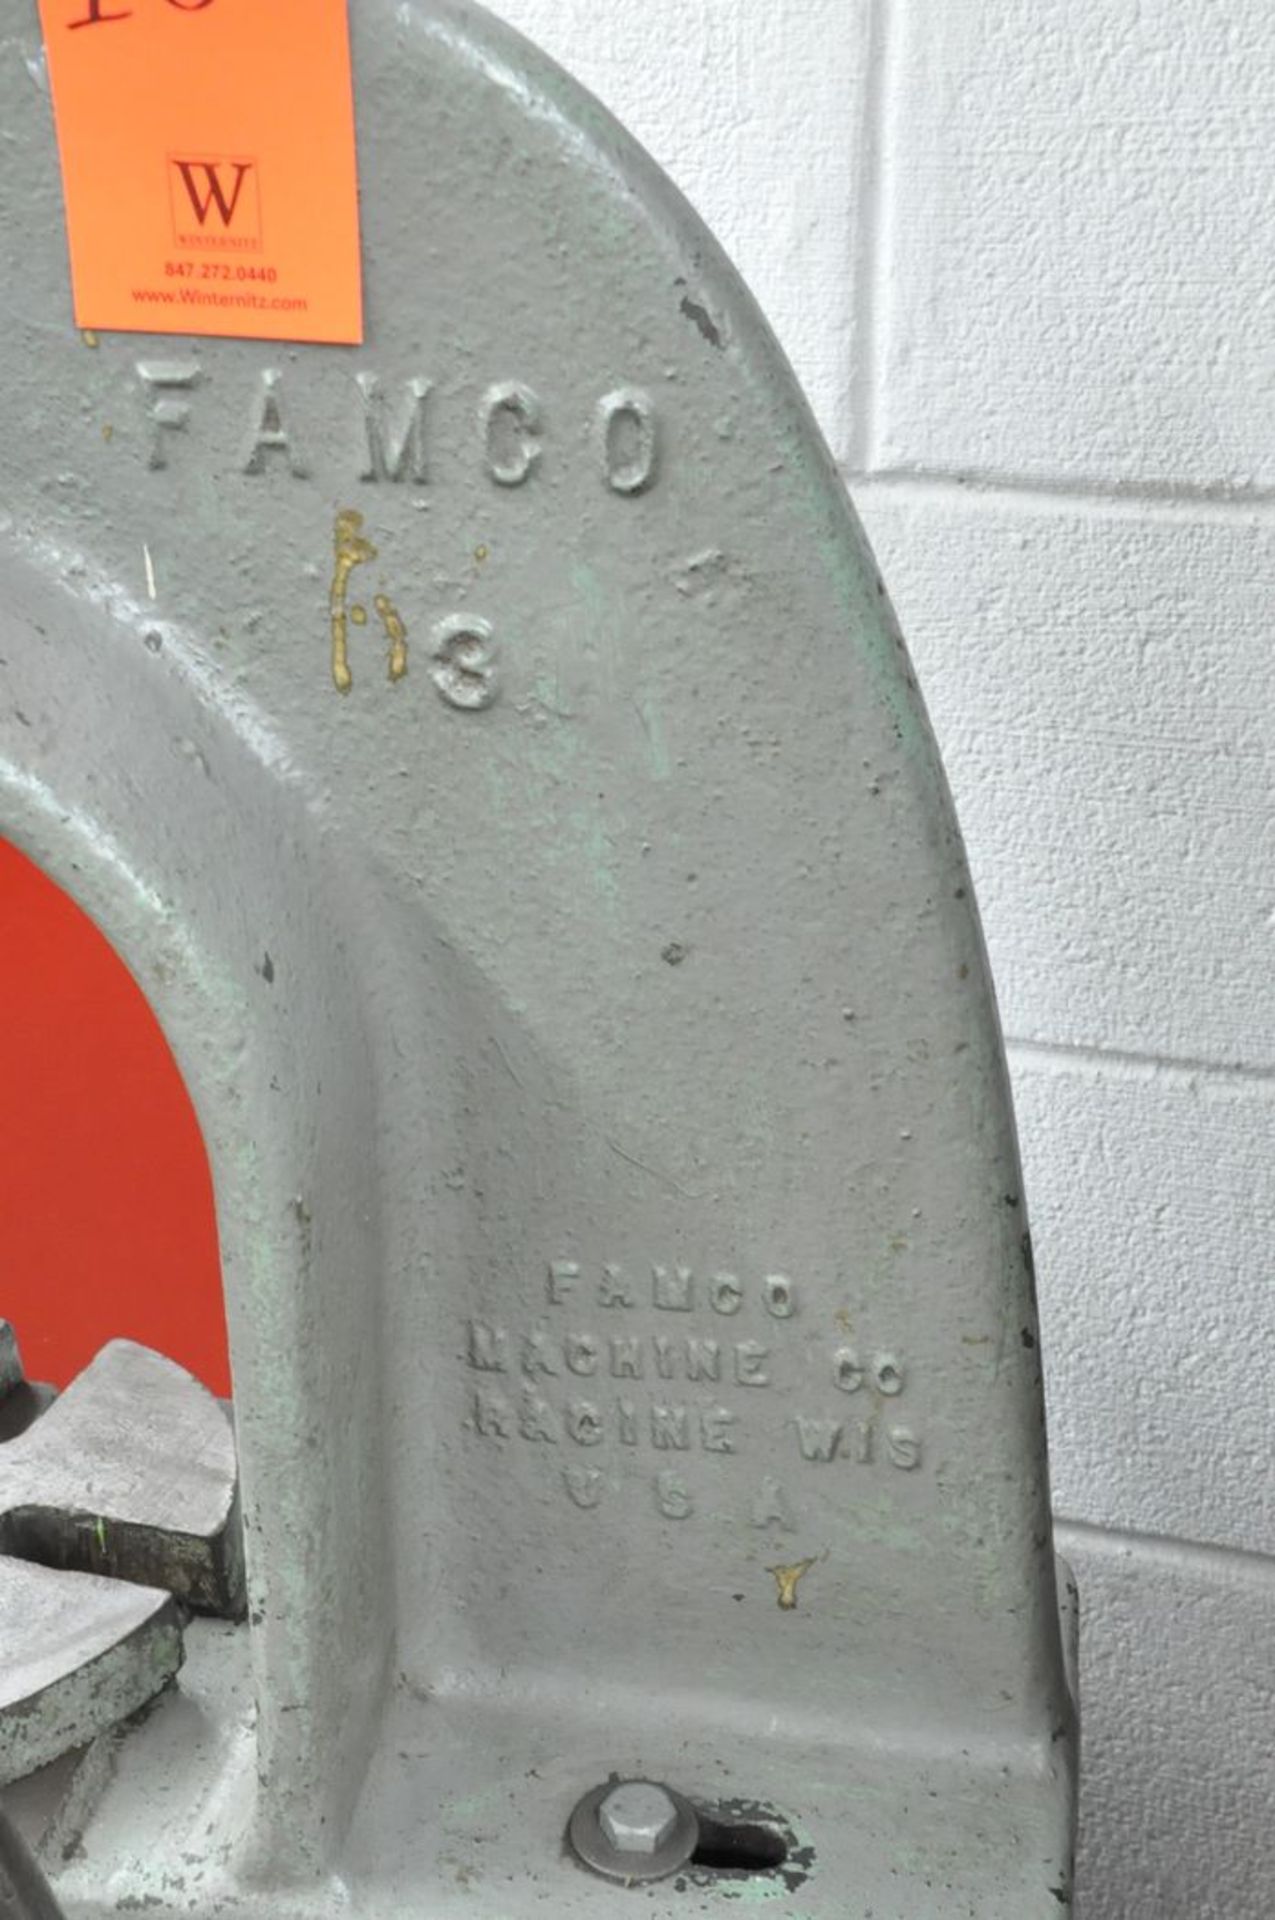 Famco No 3 Floor Standing Arbor Press - Image 2 of 2